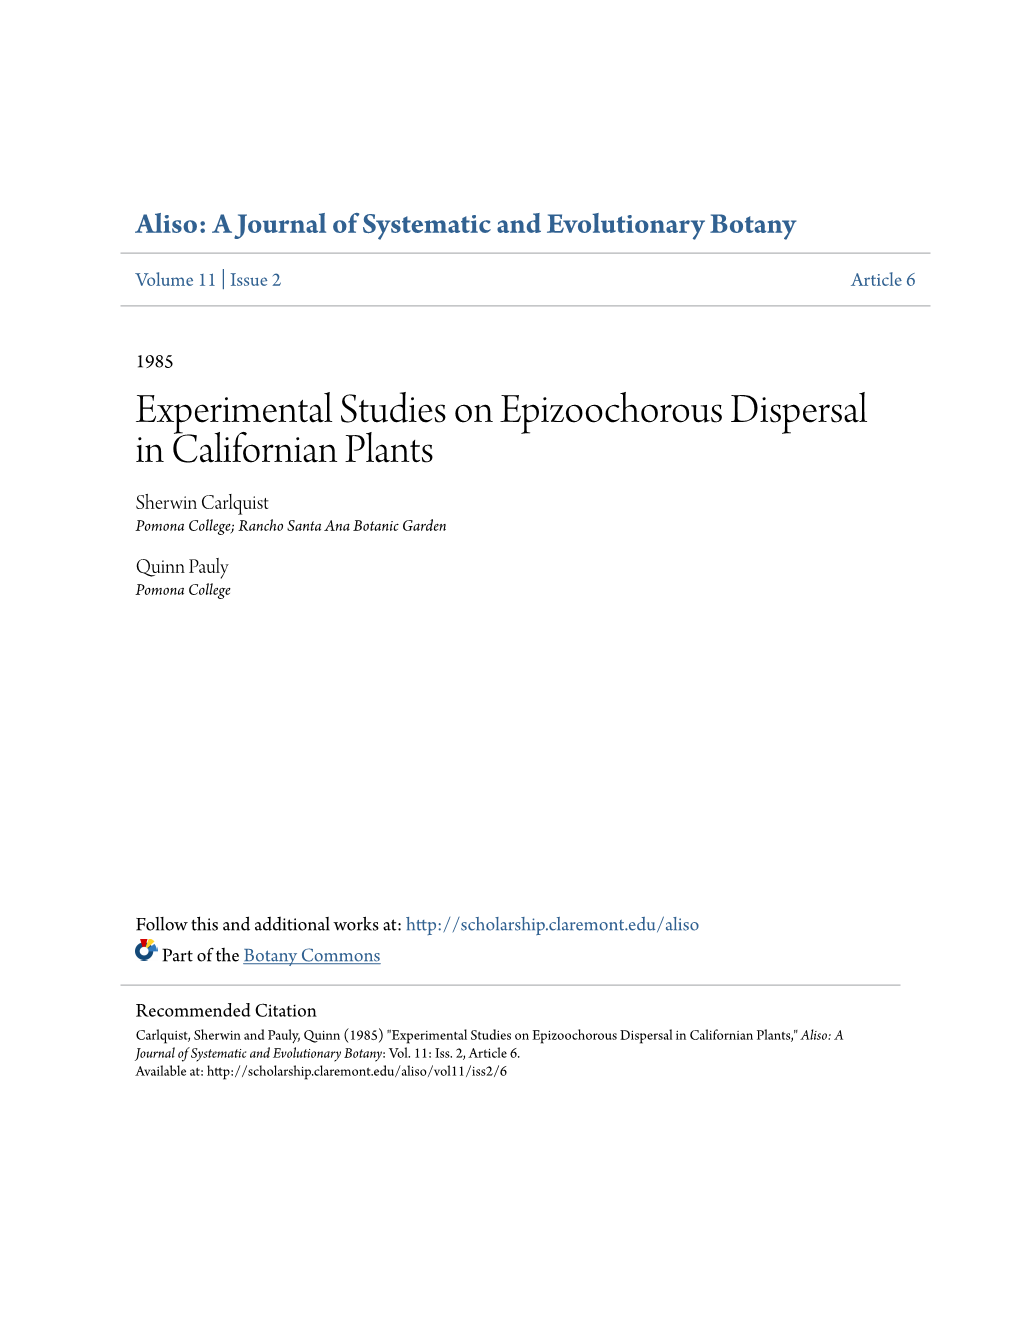 Experimental Studies on Epizoochorous Dispersal in Californian Plants Sherwin Carlquist Pomona College; Rancho Santa Ana Botanic Garden